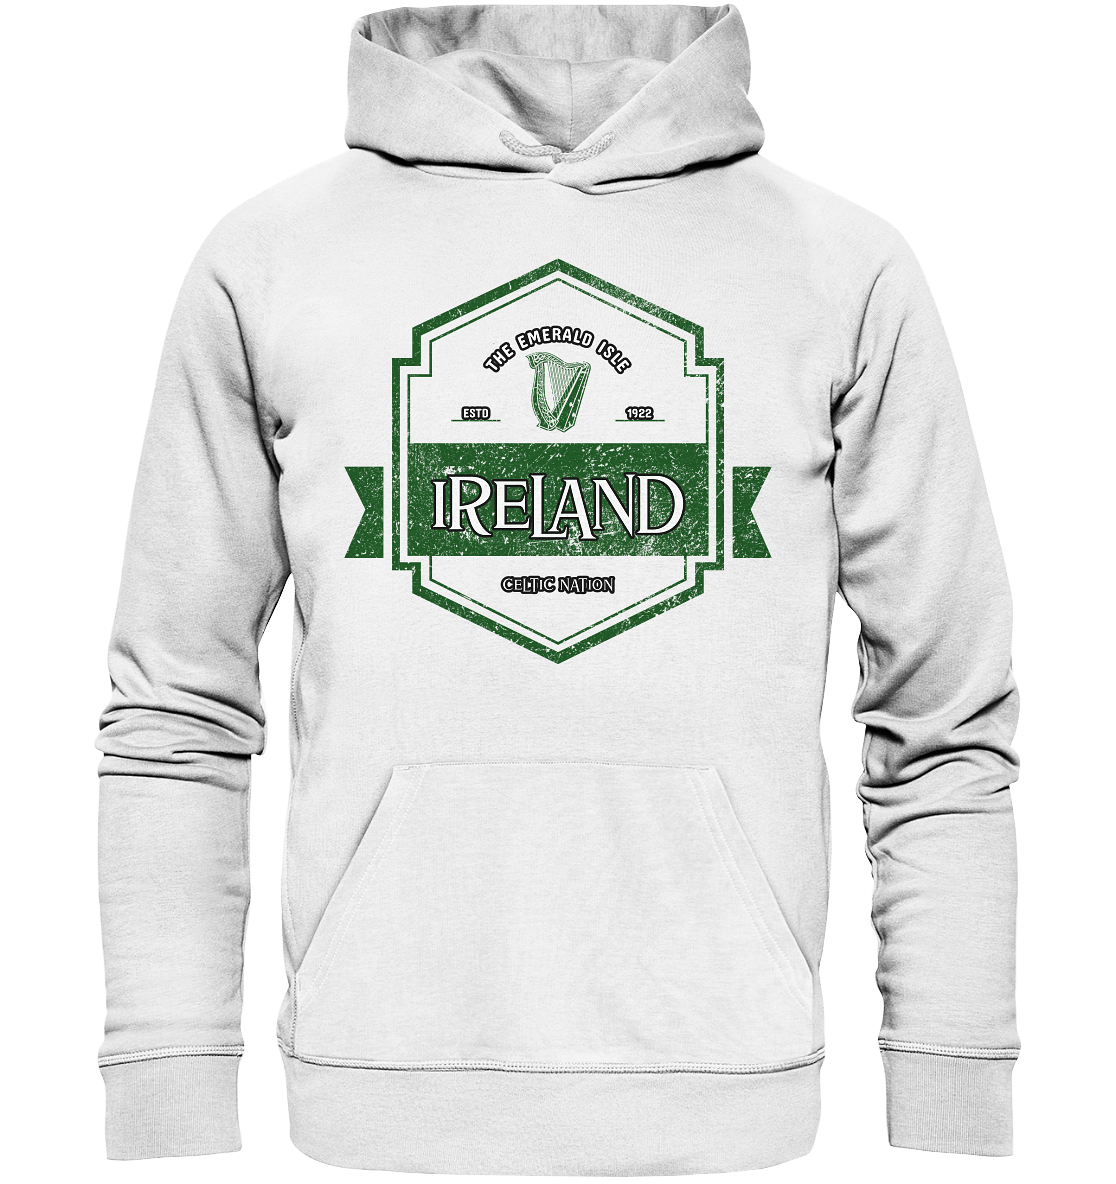 Ireland "The Emerald Isle / Celtic Nation" - Organic Hoodie